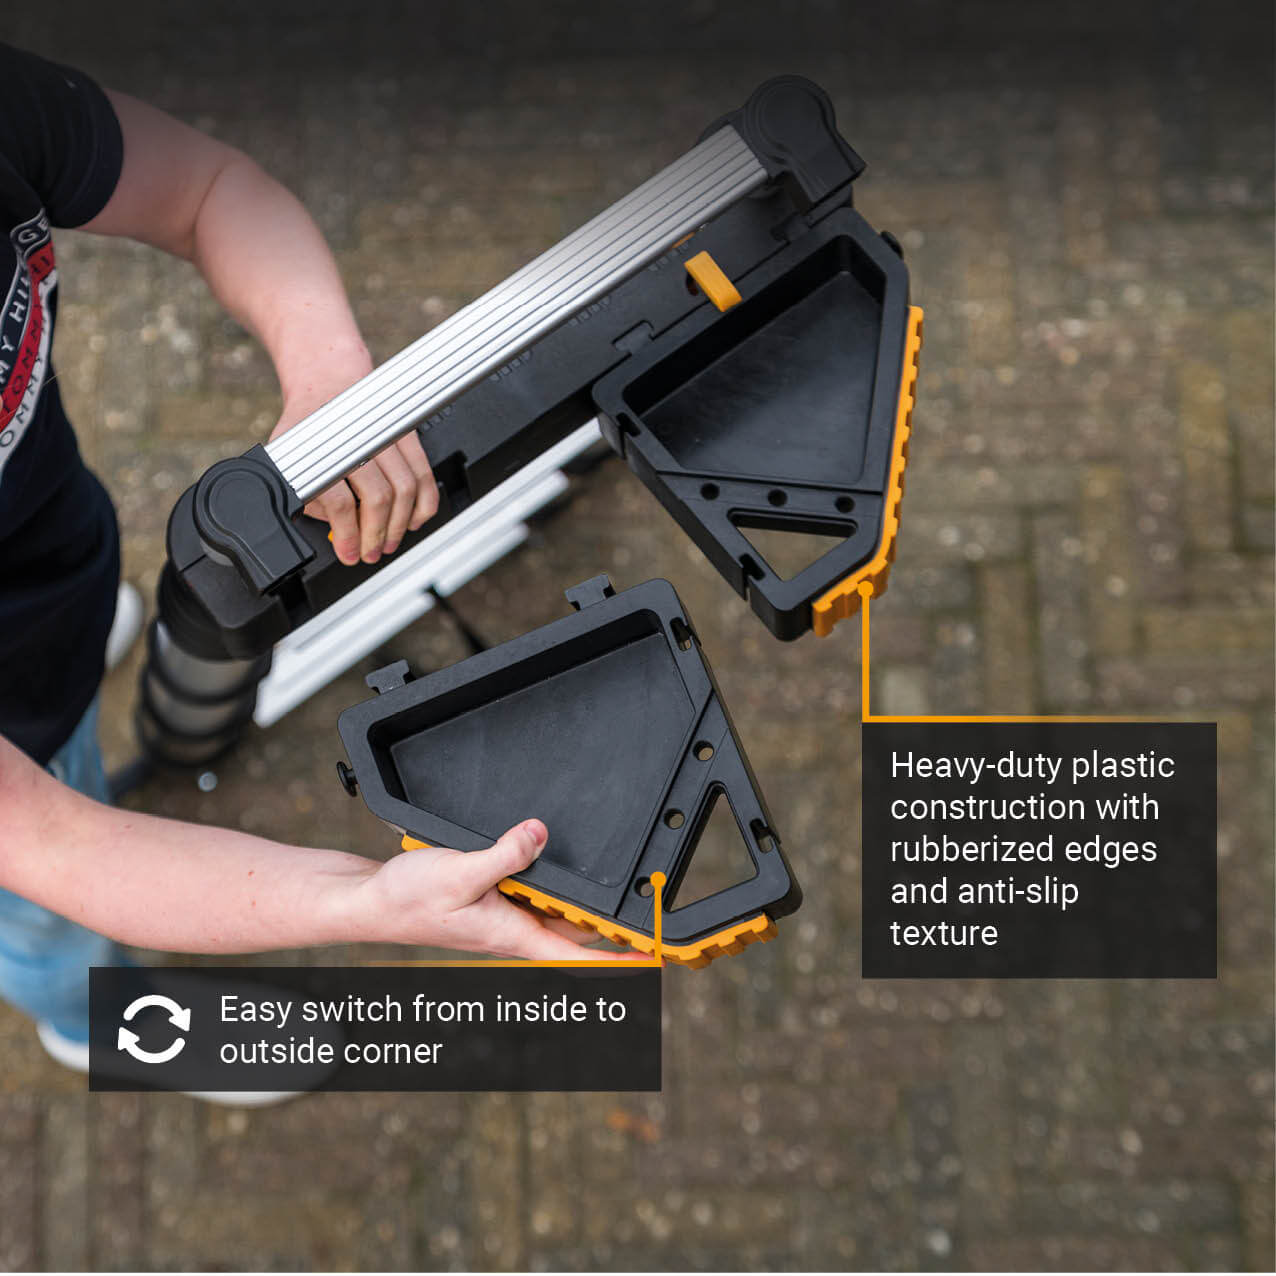 Tool tray & standoff | Accessory for telescopic ladder | Batavia